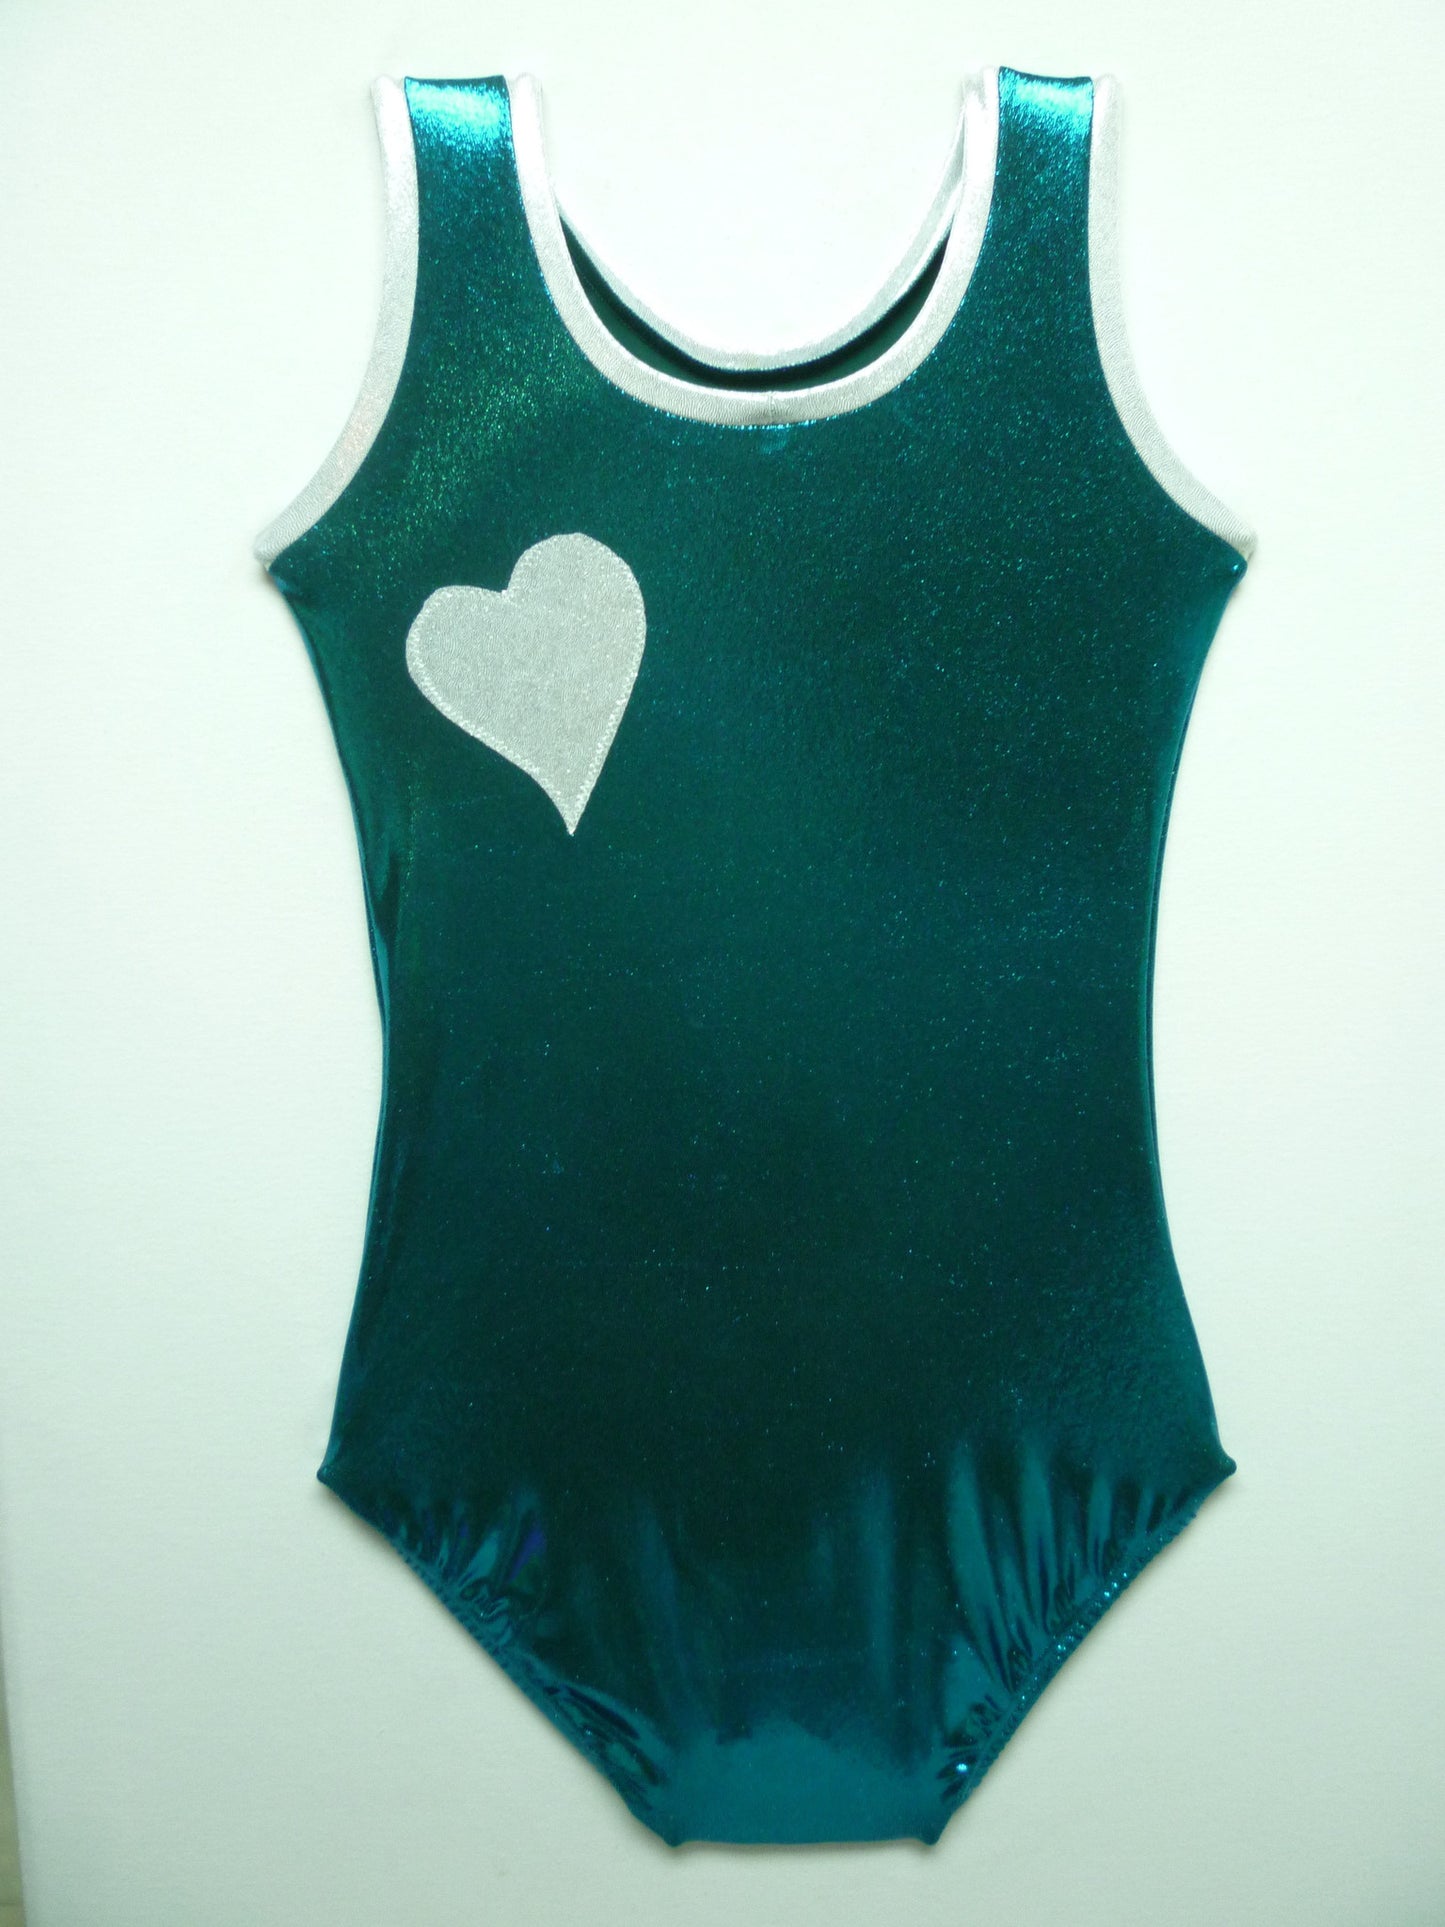 Heart- Open plus 1 Emerald Mystique Tank Bodysuit